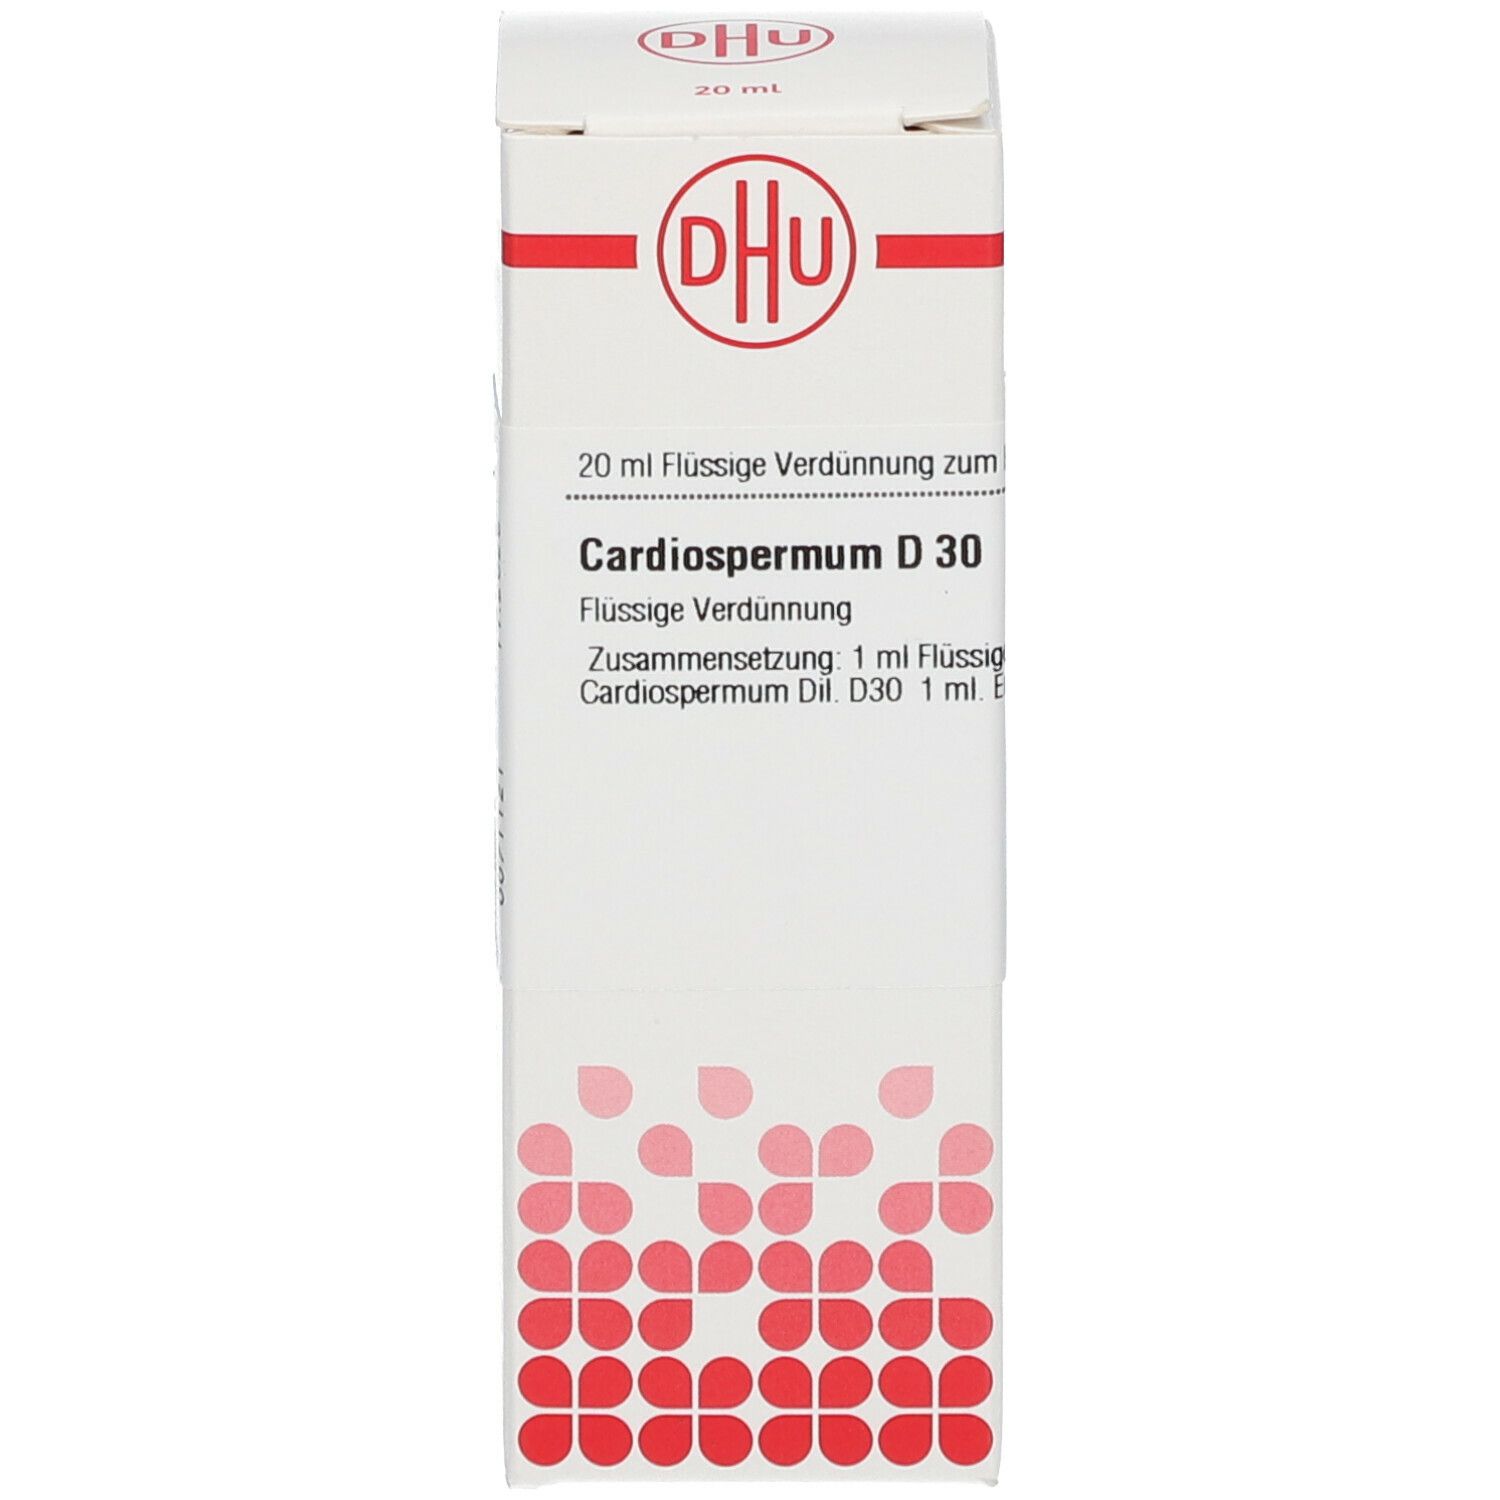 DHU Cardiospermum D30